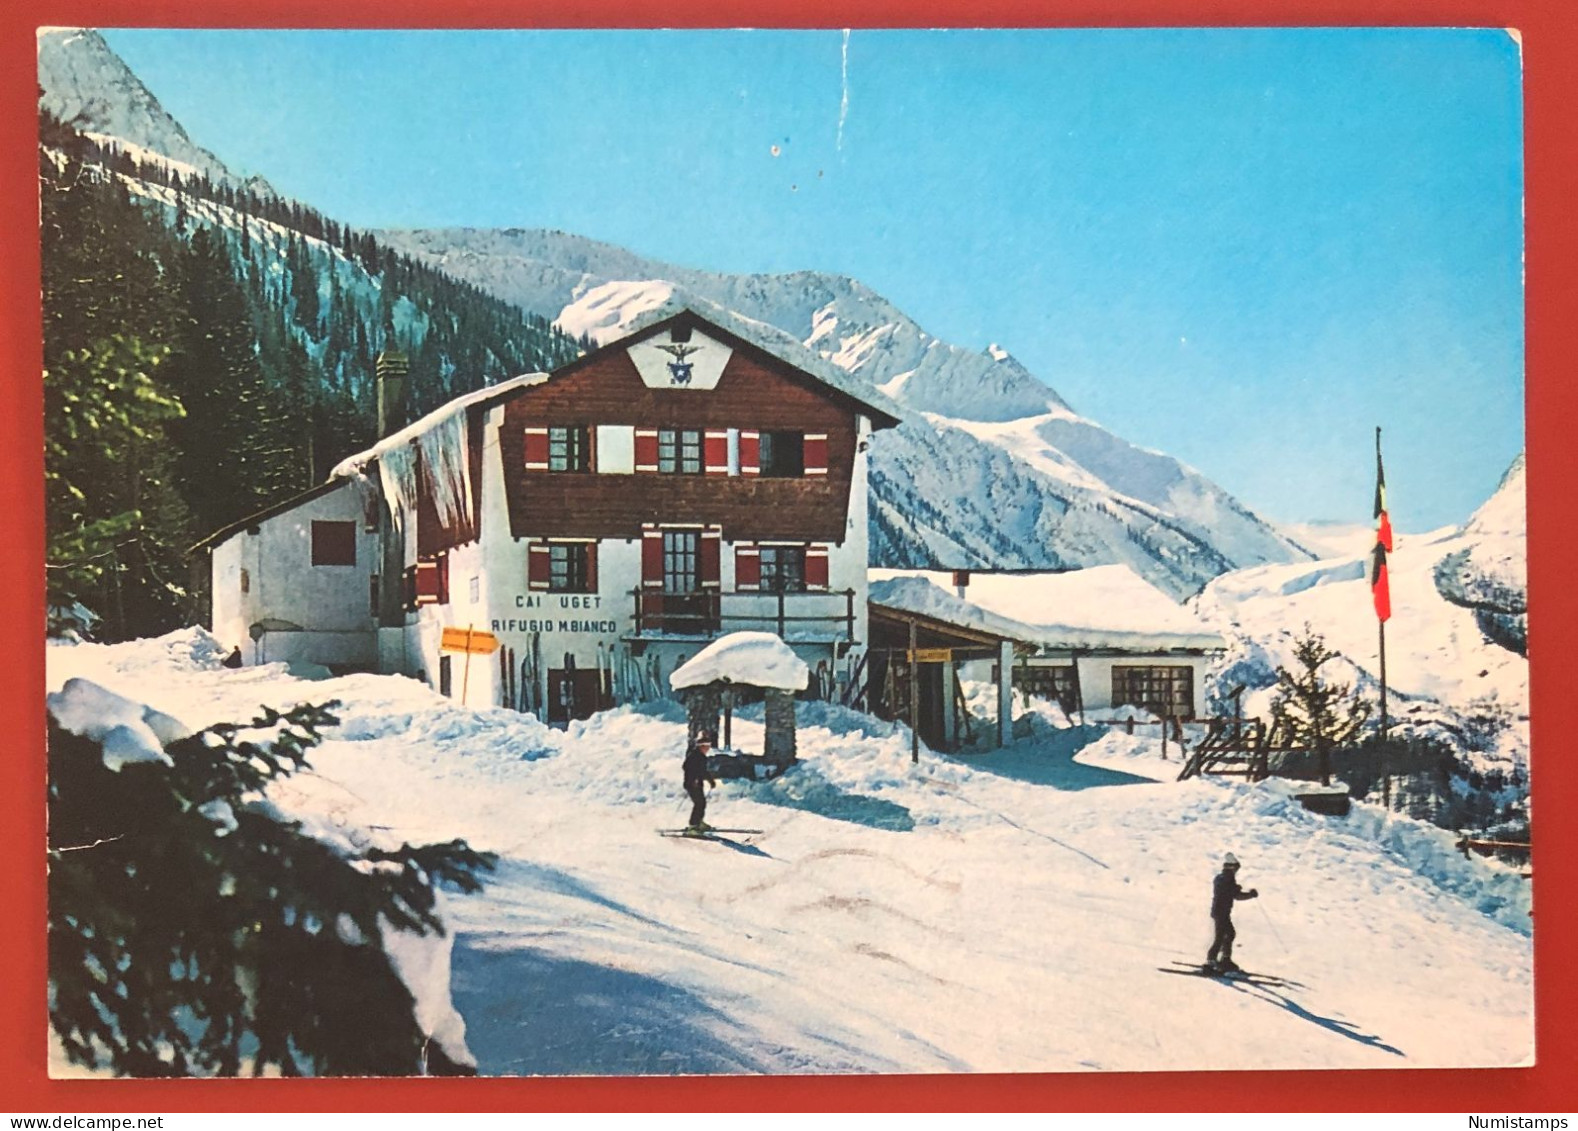 COURMAYEUR VAL VENY - Rifugio M. Bianco M. 1666 - Campeggio Nazionale CAI - UGET - 1976 (c844) - Aosta